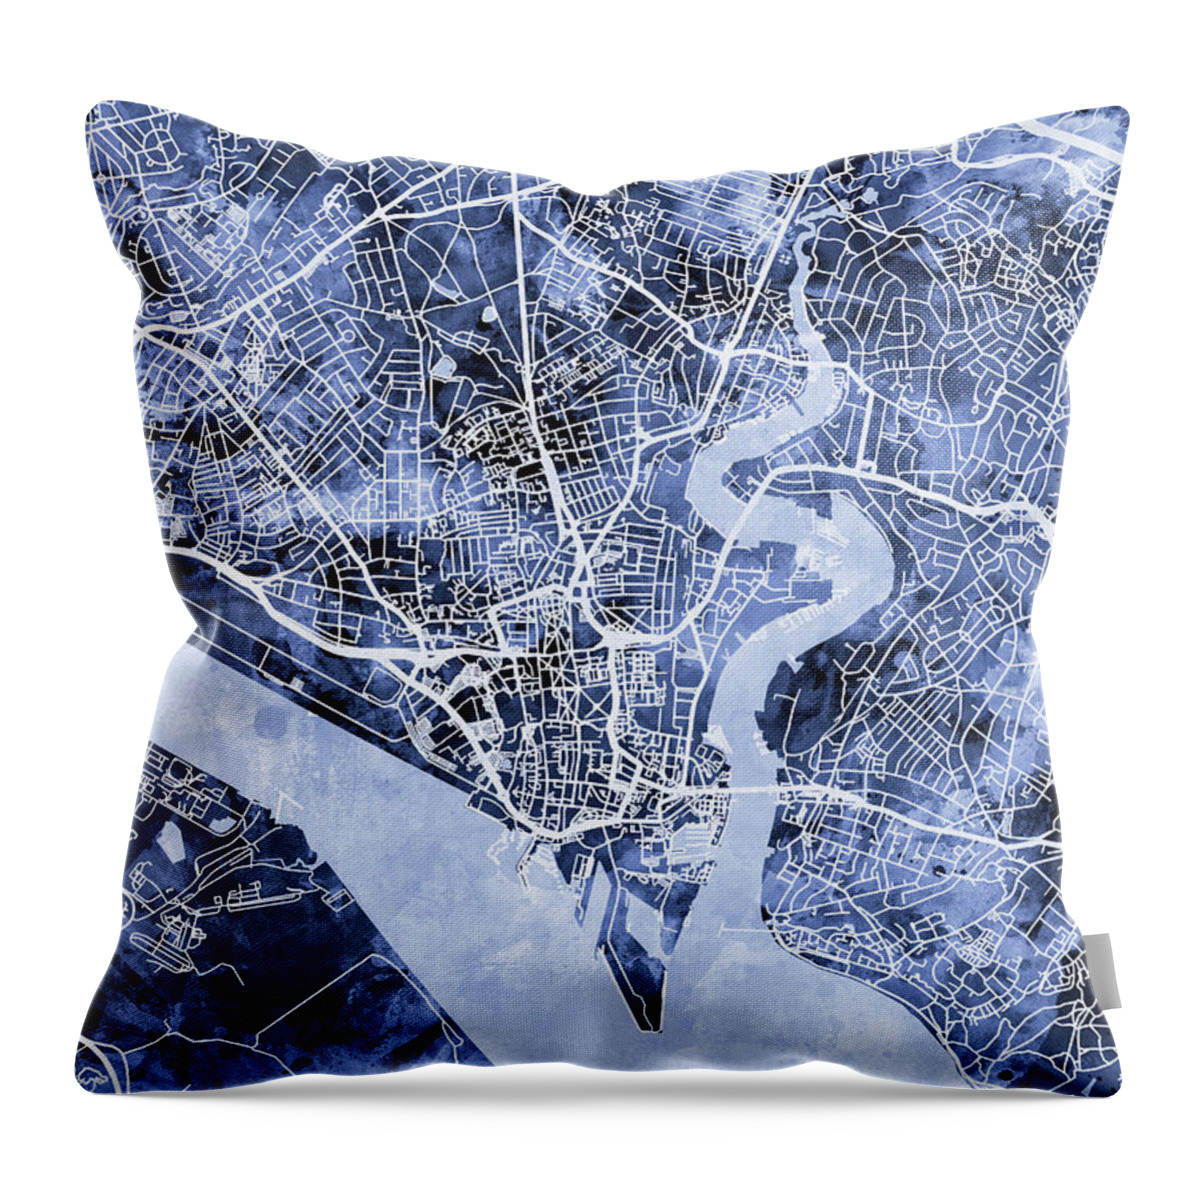 Southampton Throw Pillow featuring the digital art Southampton England City Map #4 by Michael Tompsett